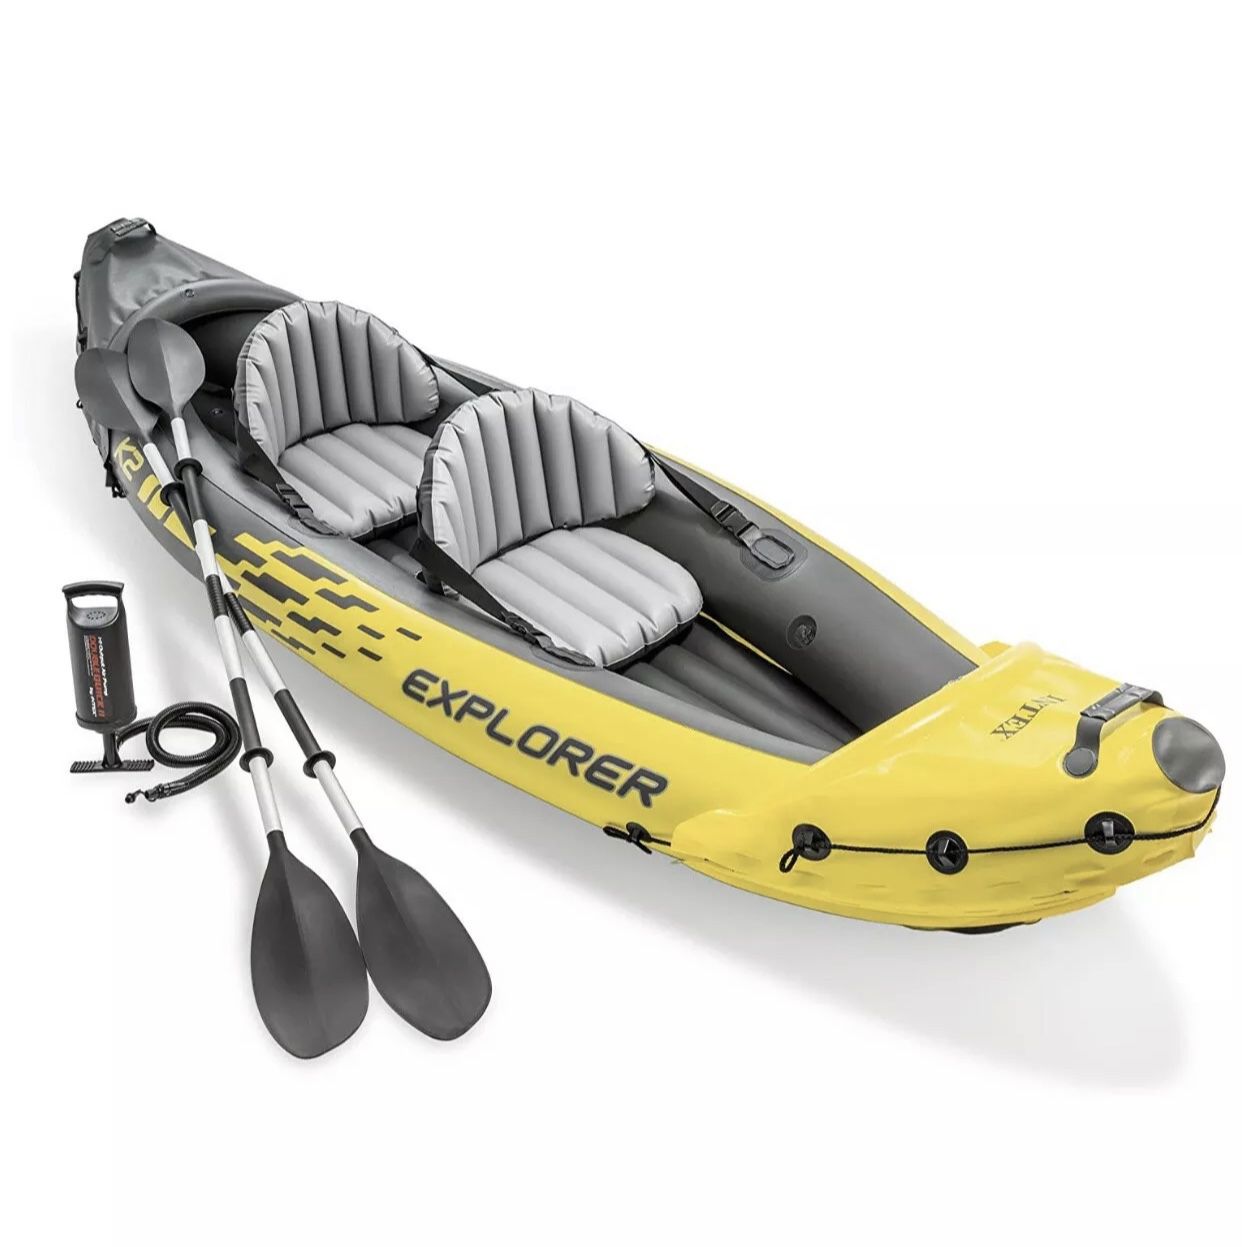 Intex Explorer K2 kayak BRAND NEW inflatable kayak